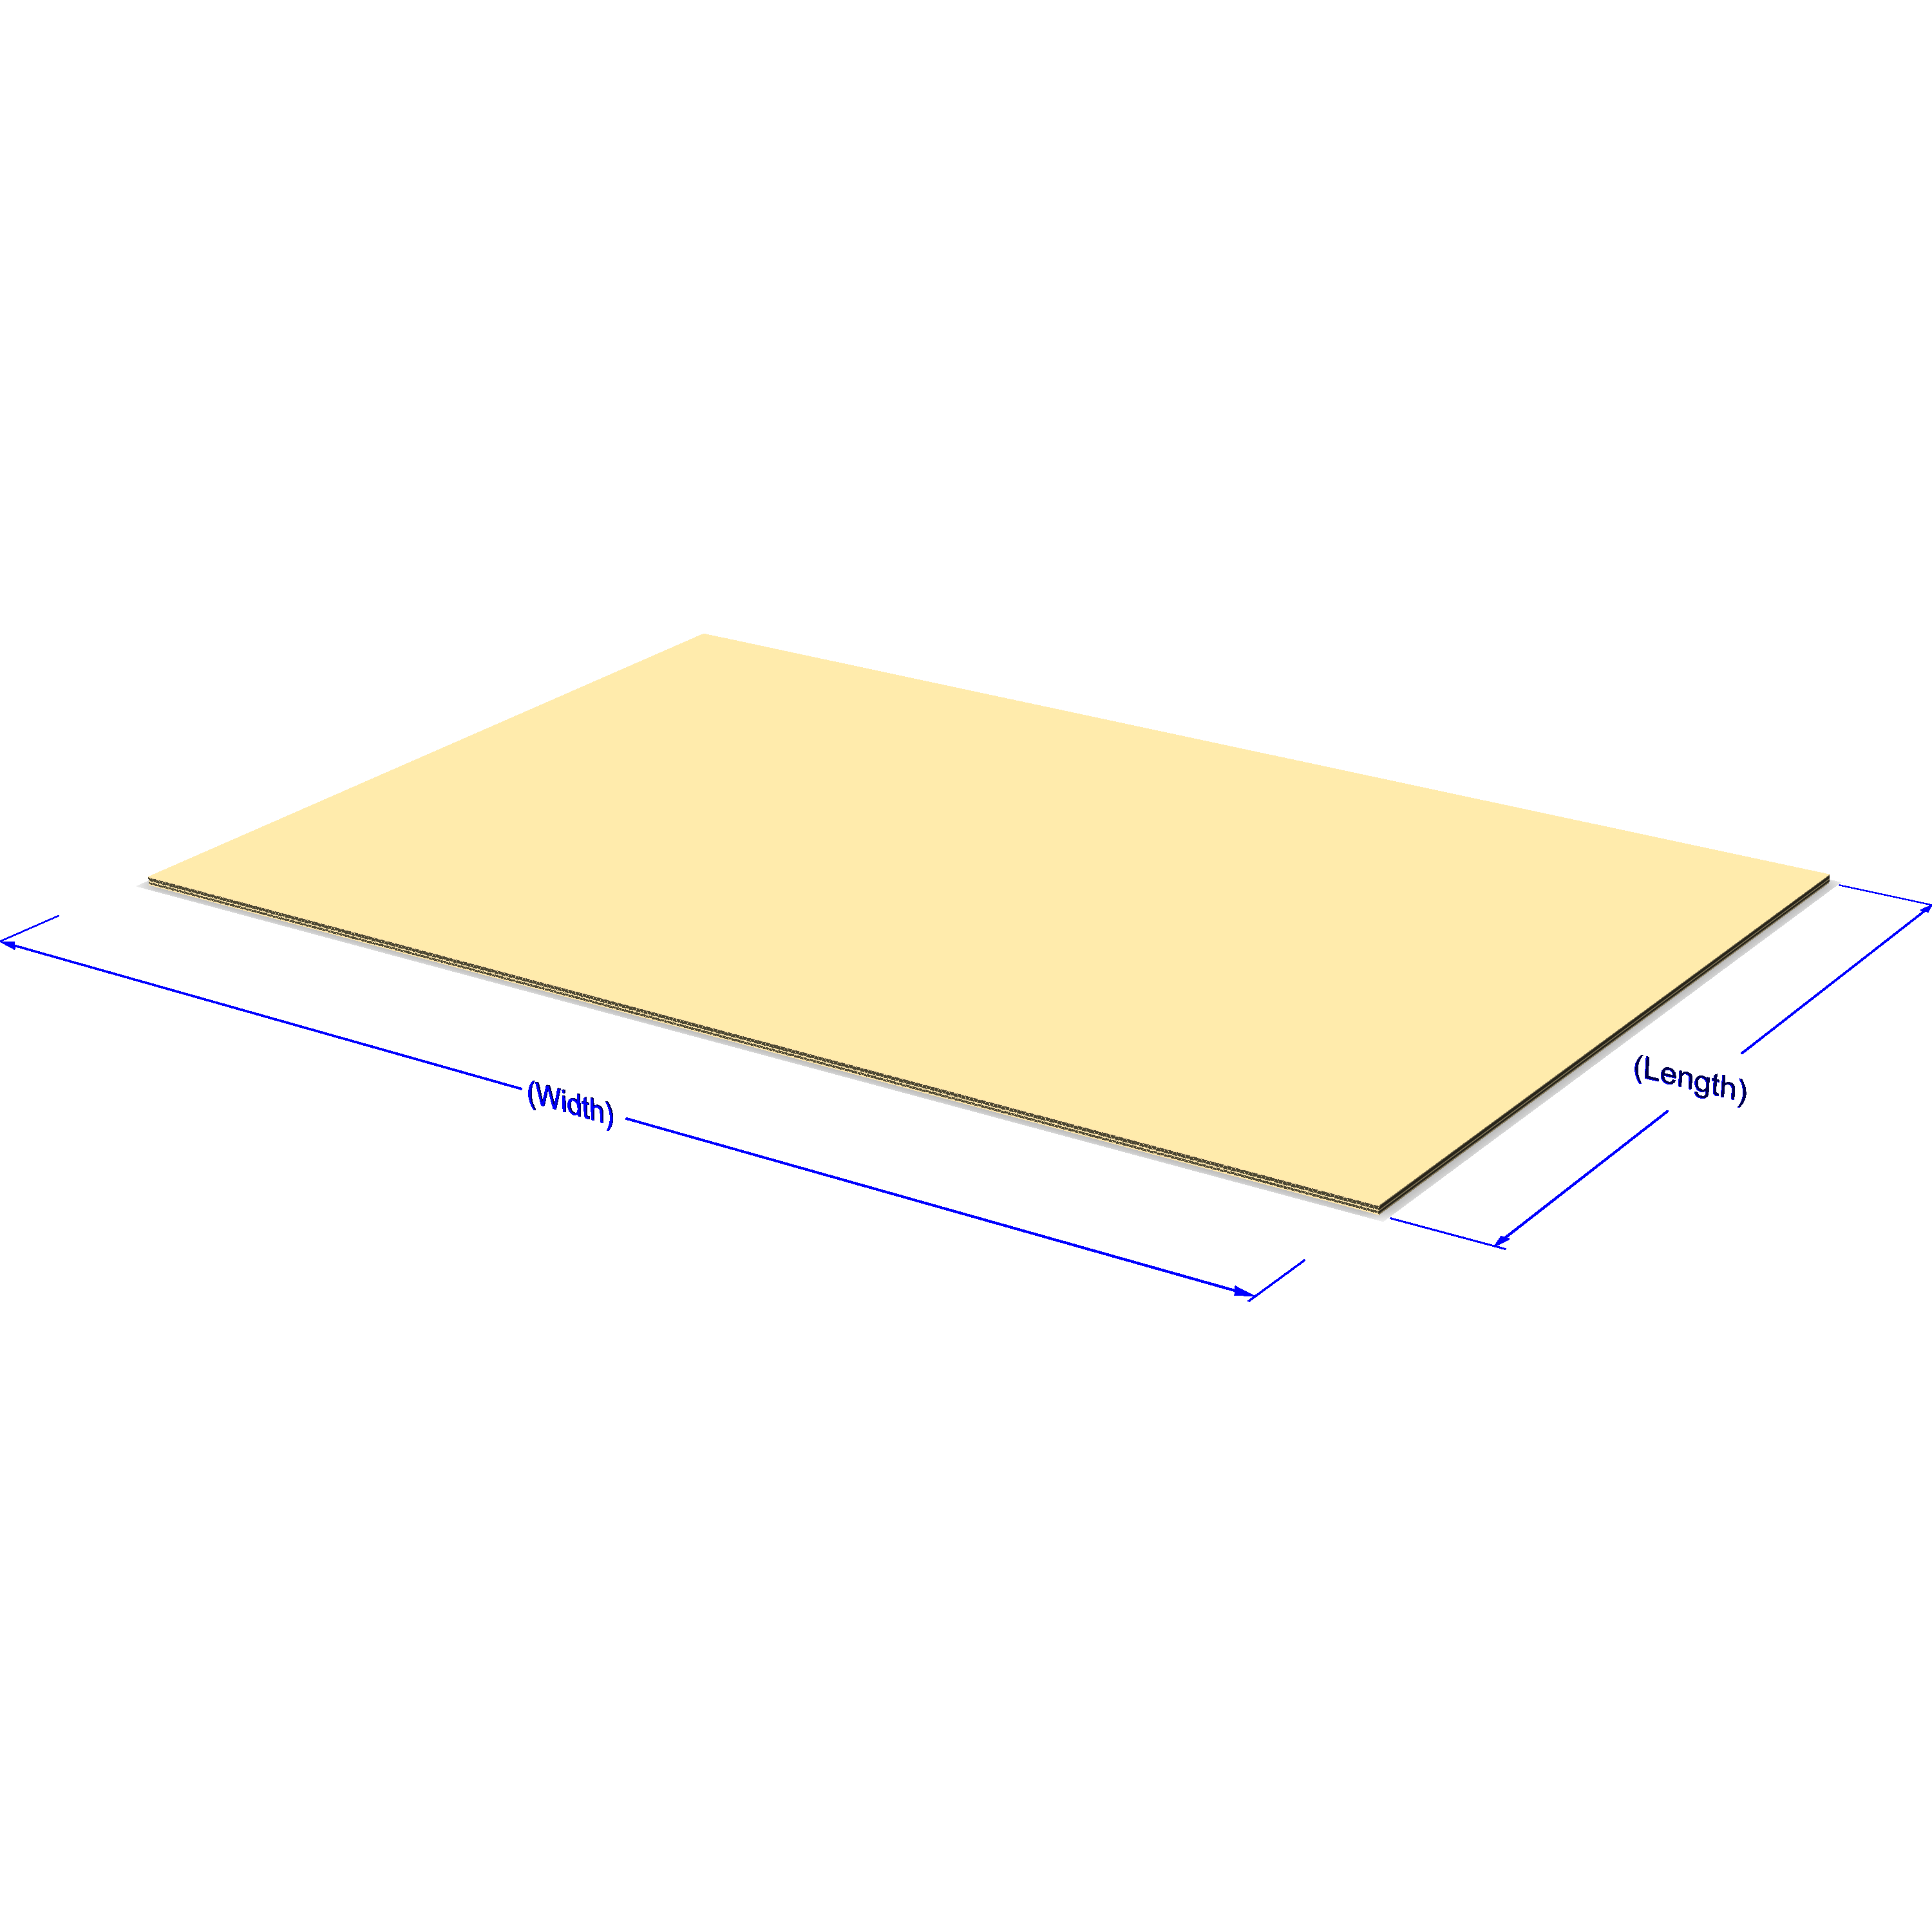 Cardboard Sheets1830MM X 2440MM DOUBLE WALL CARDBOARD SHEETS